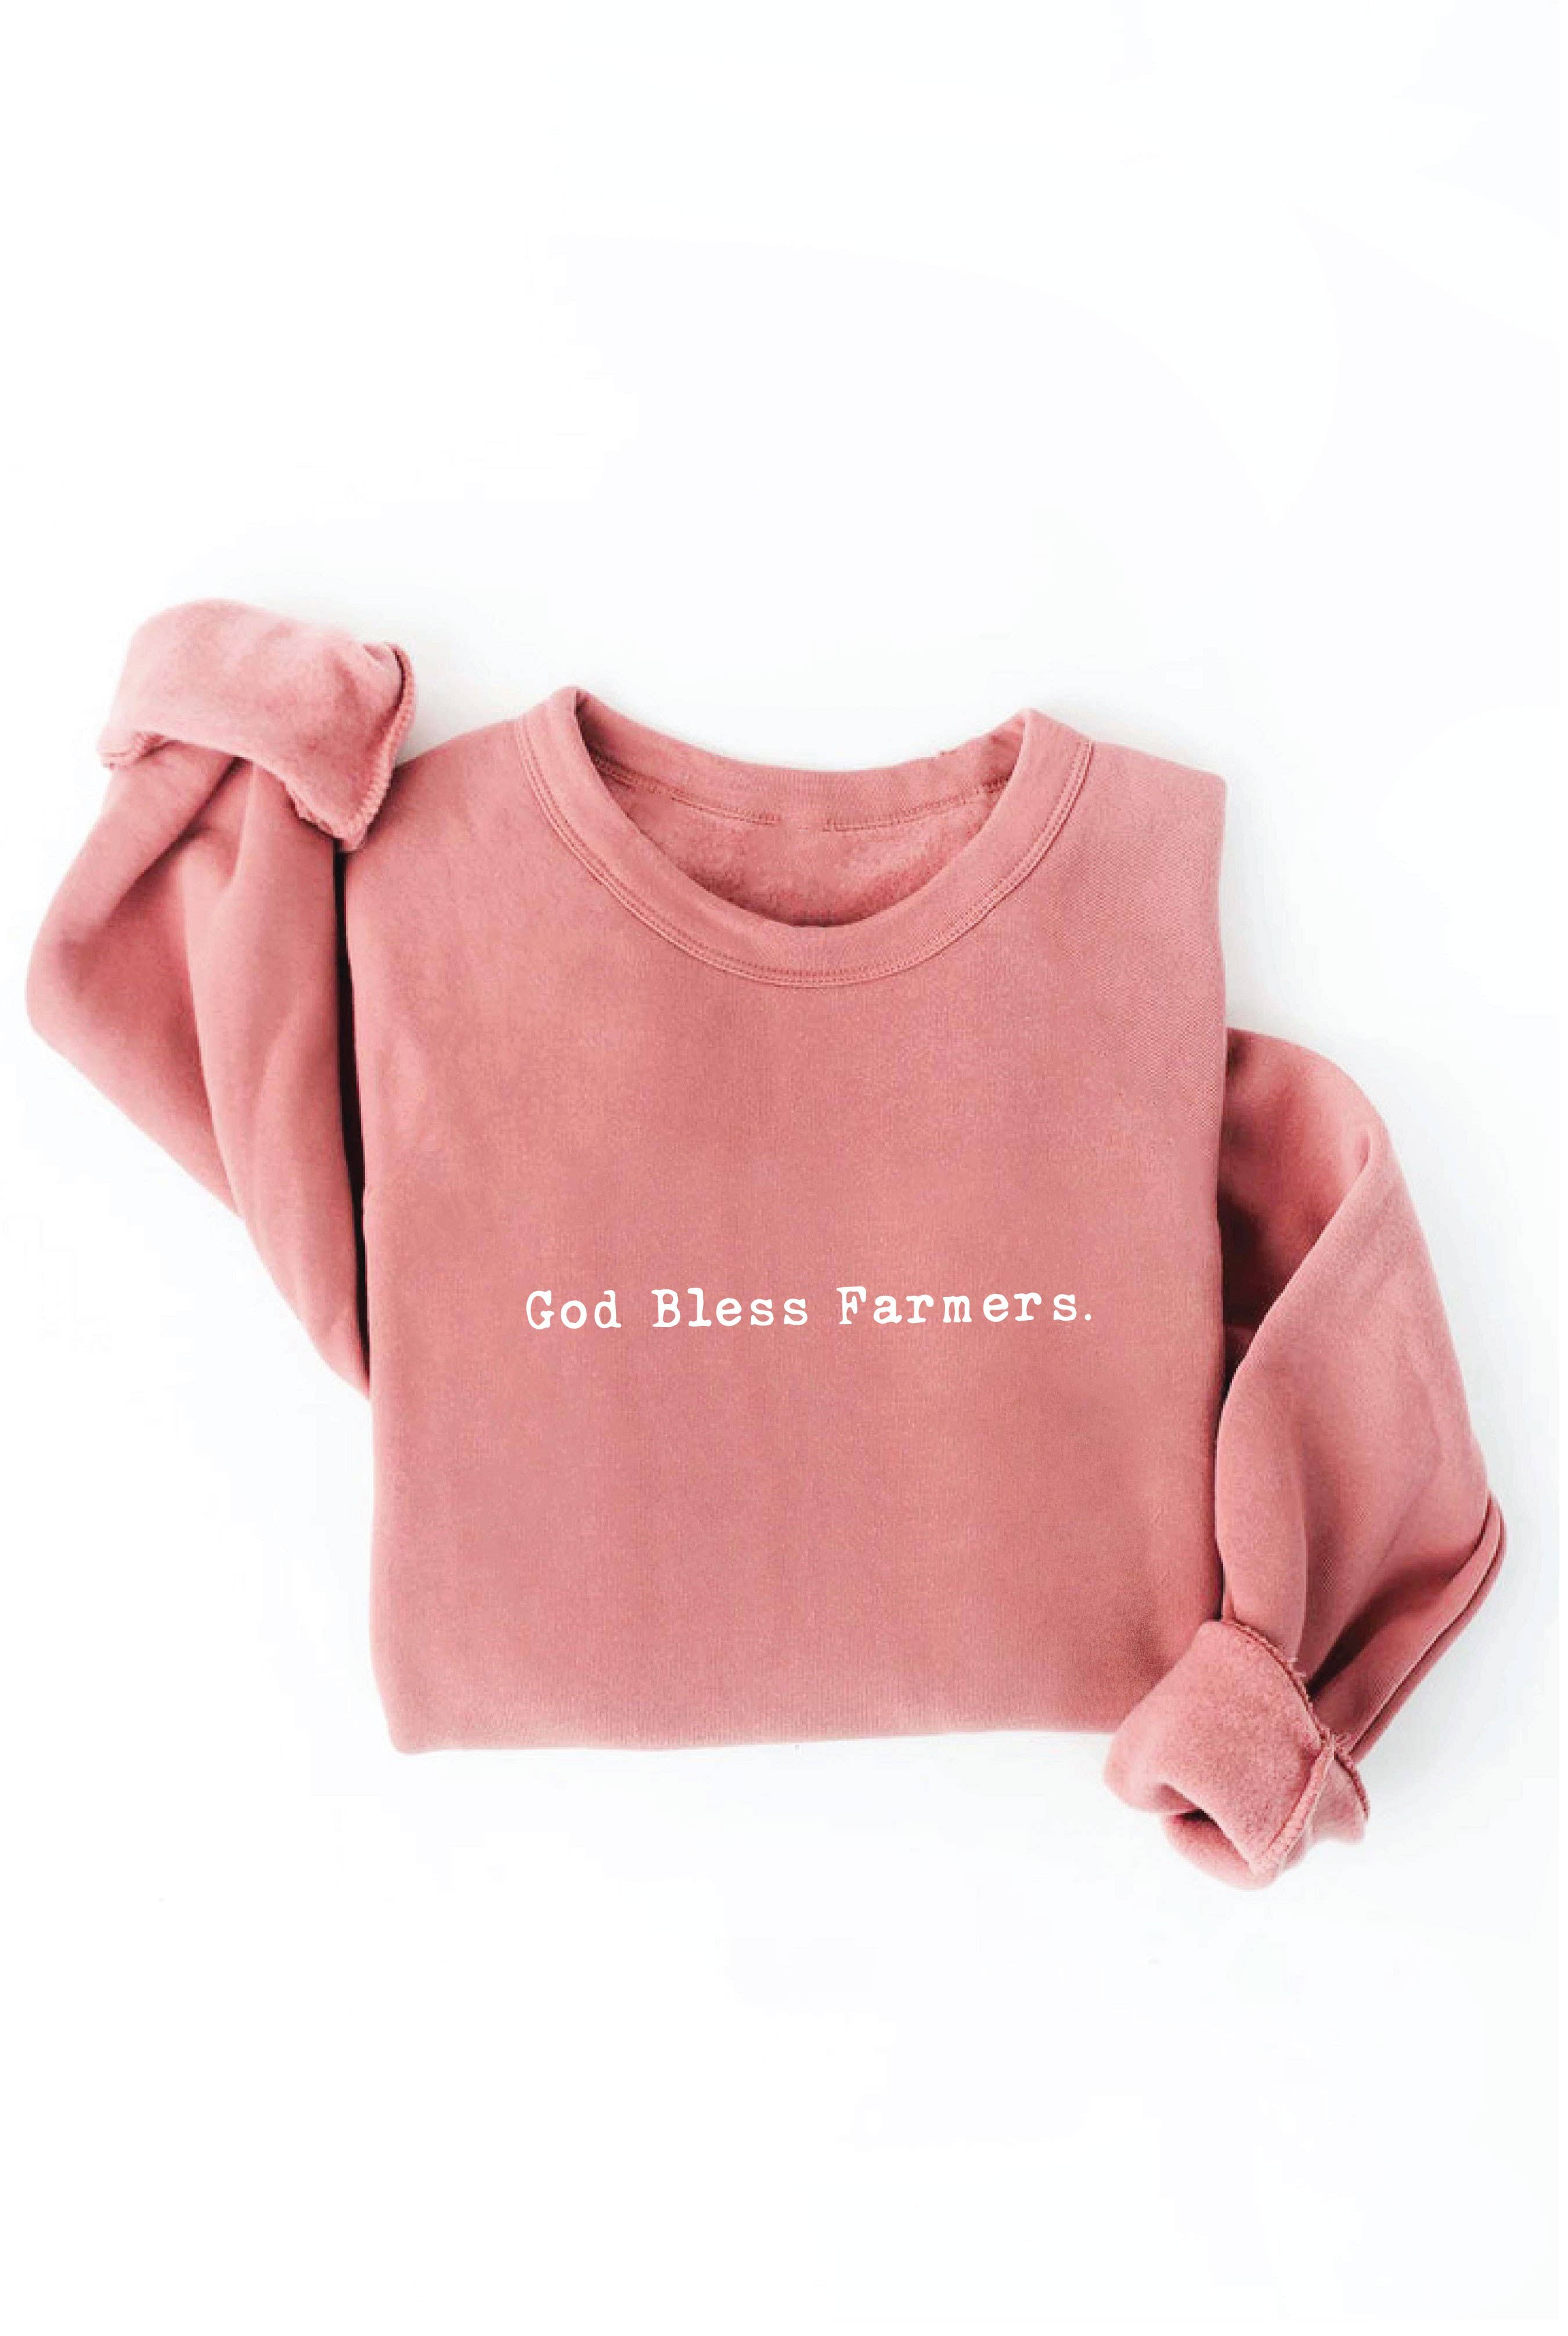 GOD BLESS FARMERS. Graphic Sweatshirt: XL / VINTAGE WHITE LONG SLEEVE